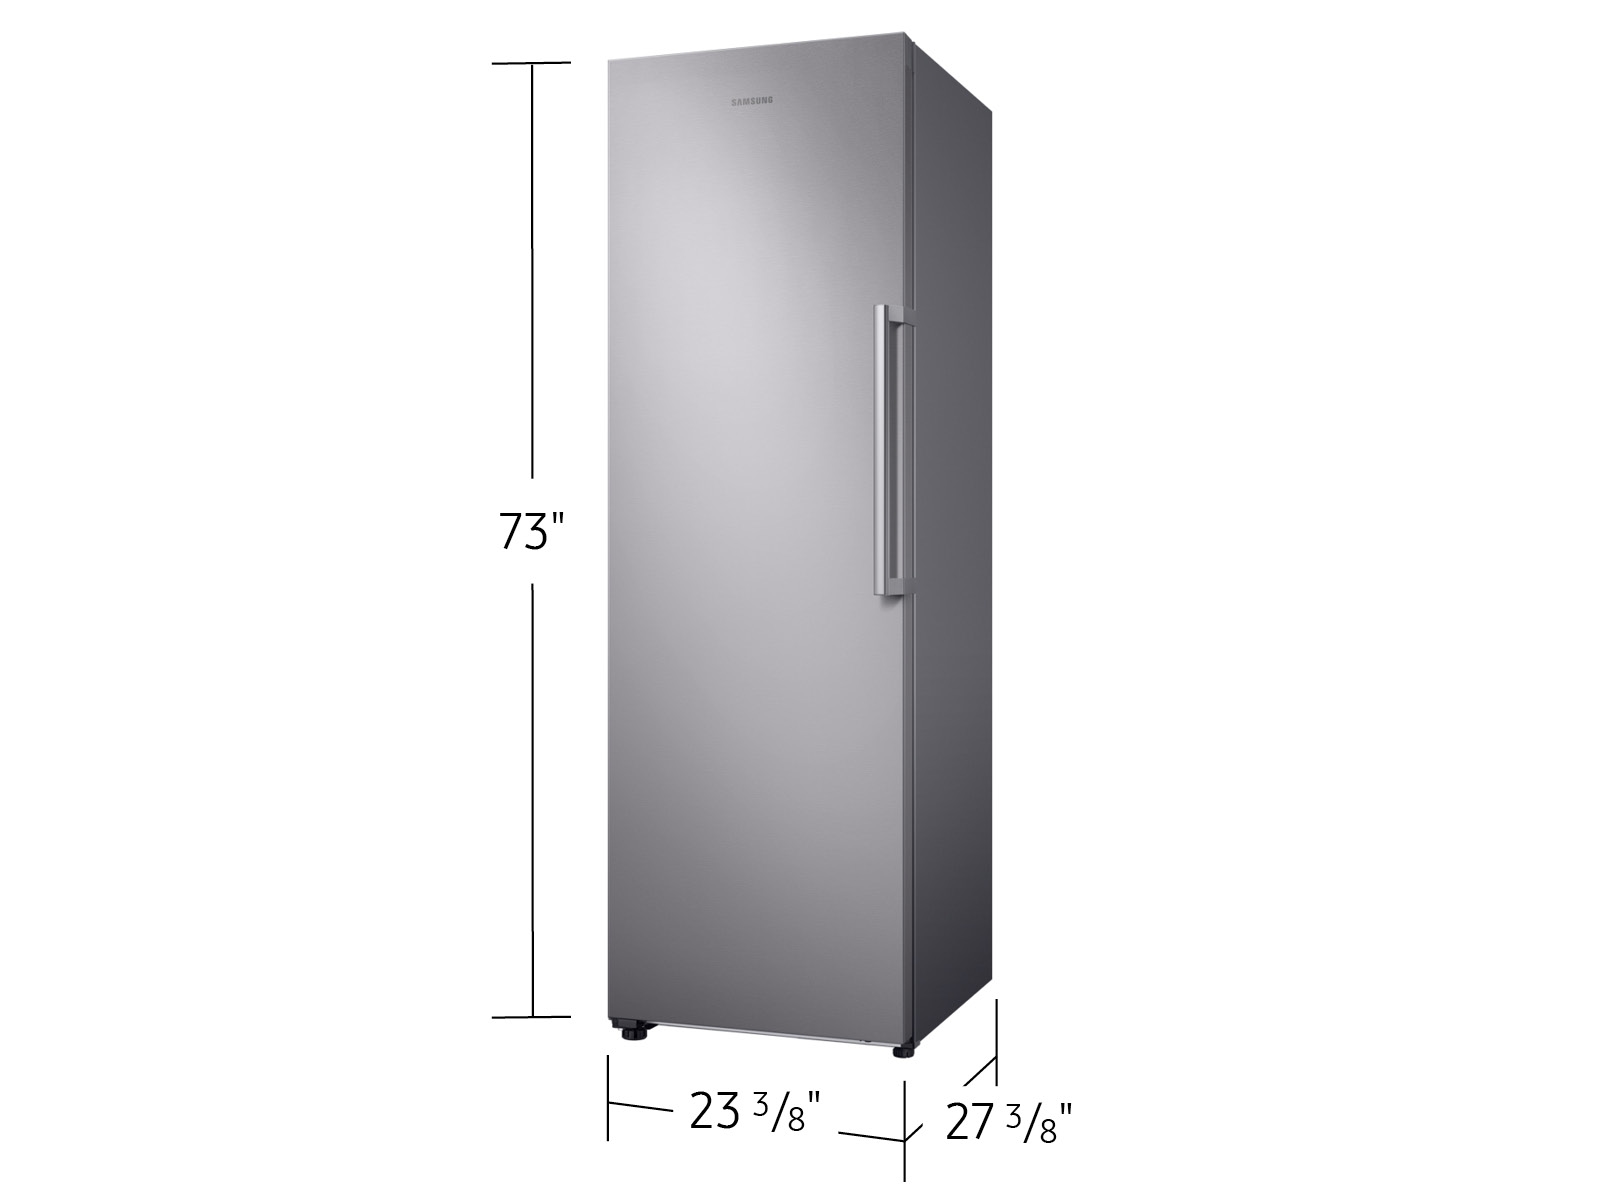 Fridge Refrigerator Deep Freezer Automatic On Off Switch